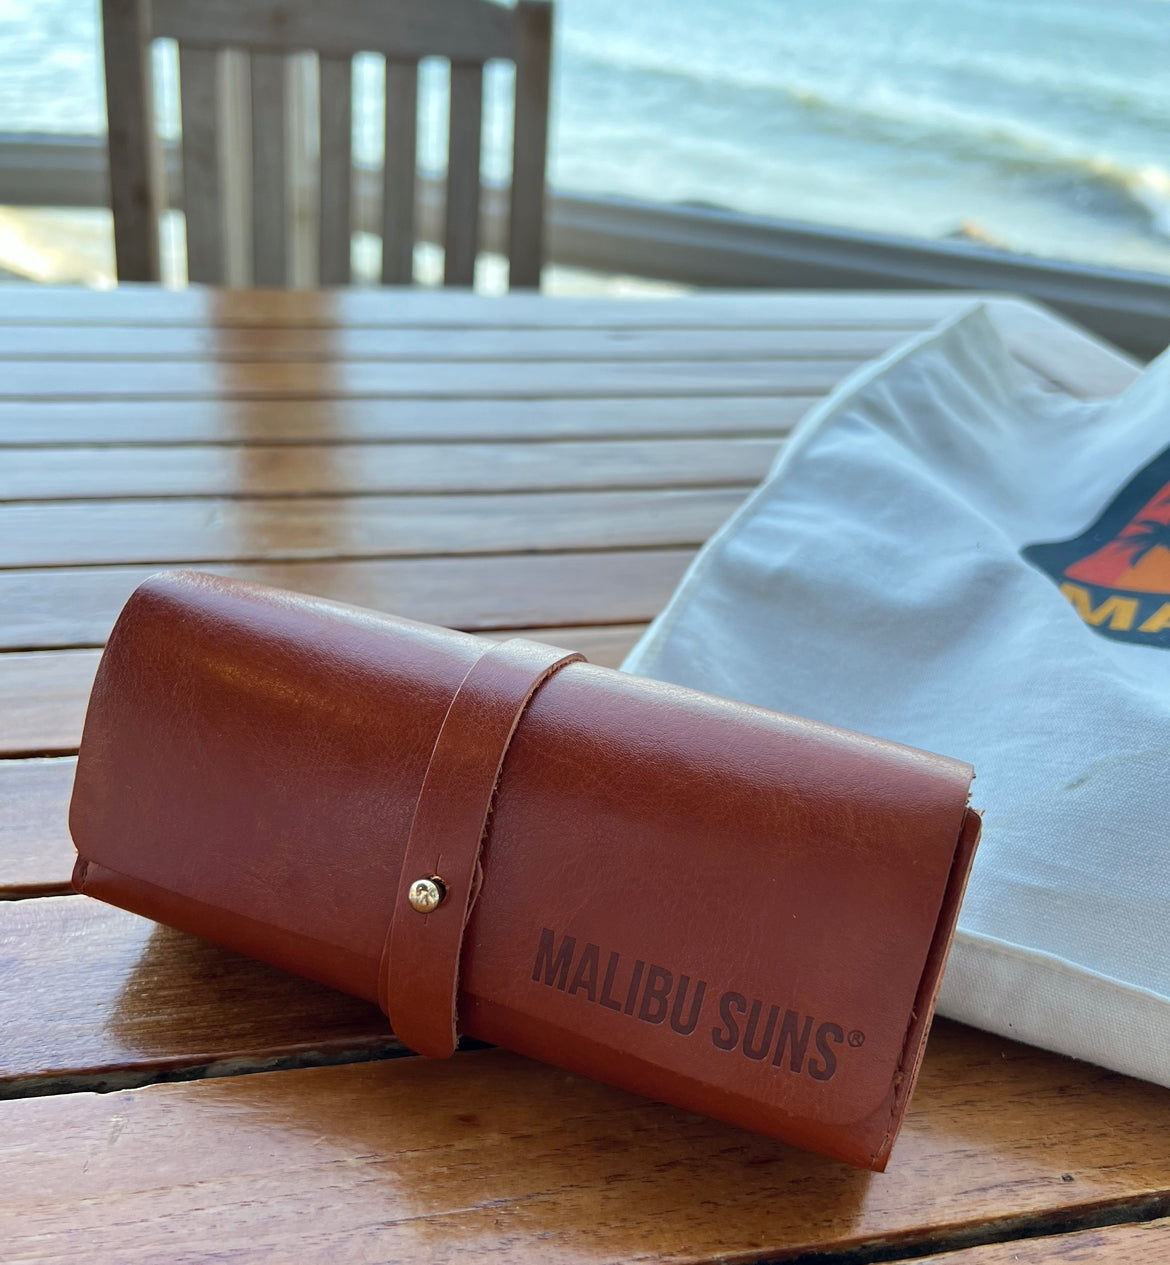 Malibu Suns® Promenades, bright lights to Summer nights, all day UV protection Suns.